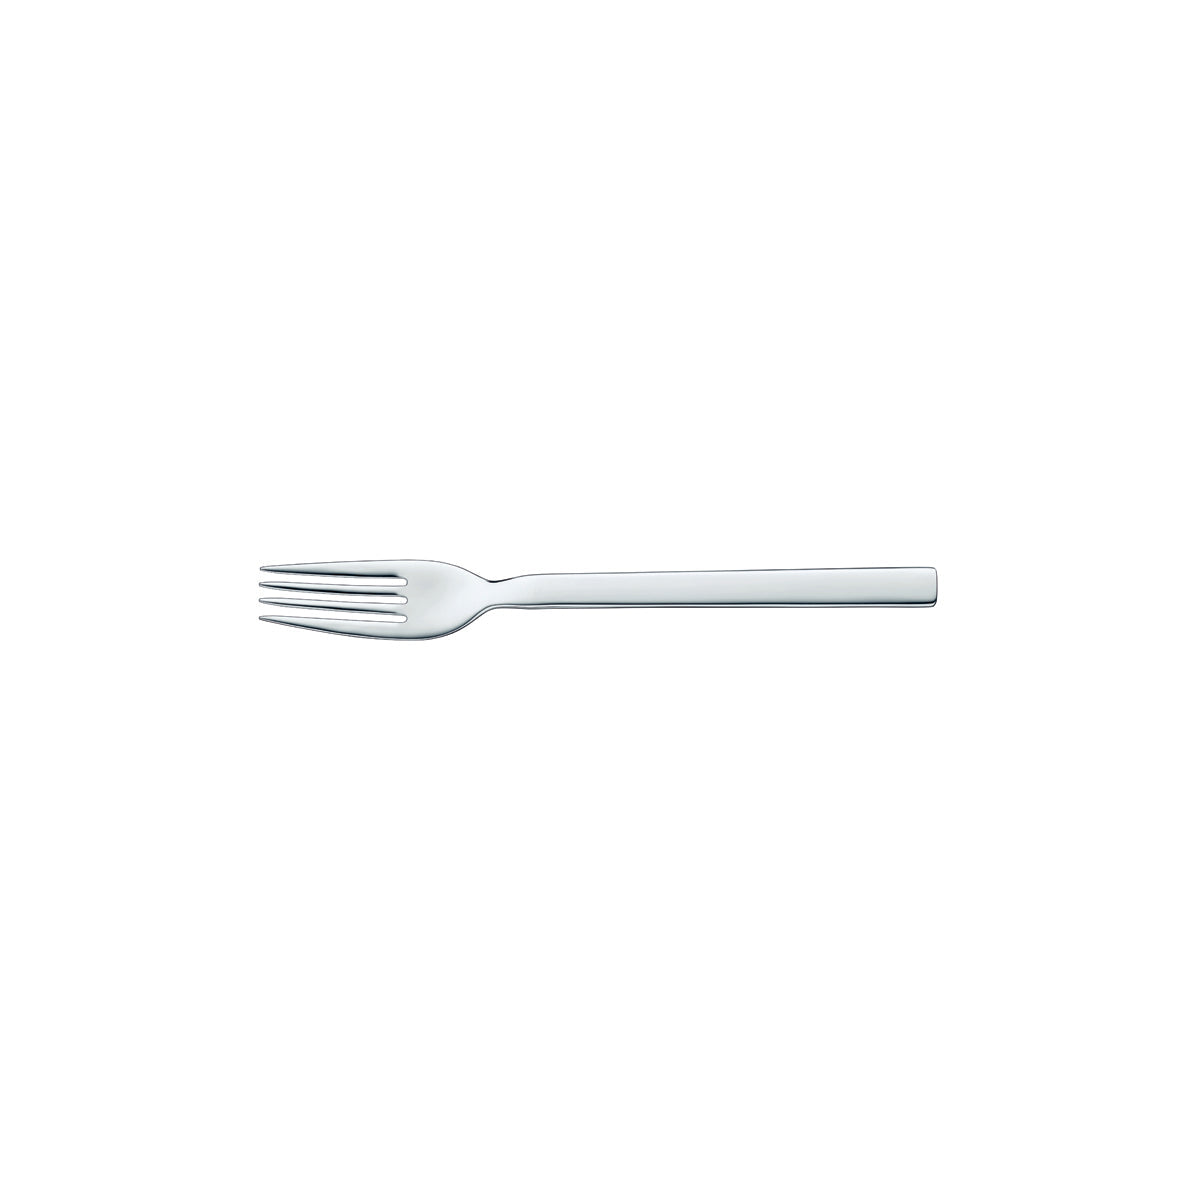 12.5302.6540 WMF Unic Table Fork Chrome Tomkin Australia Hospitality Supplies